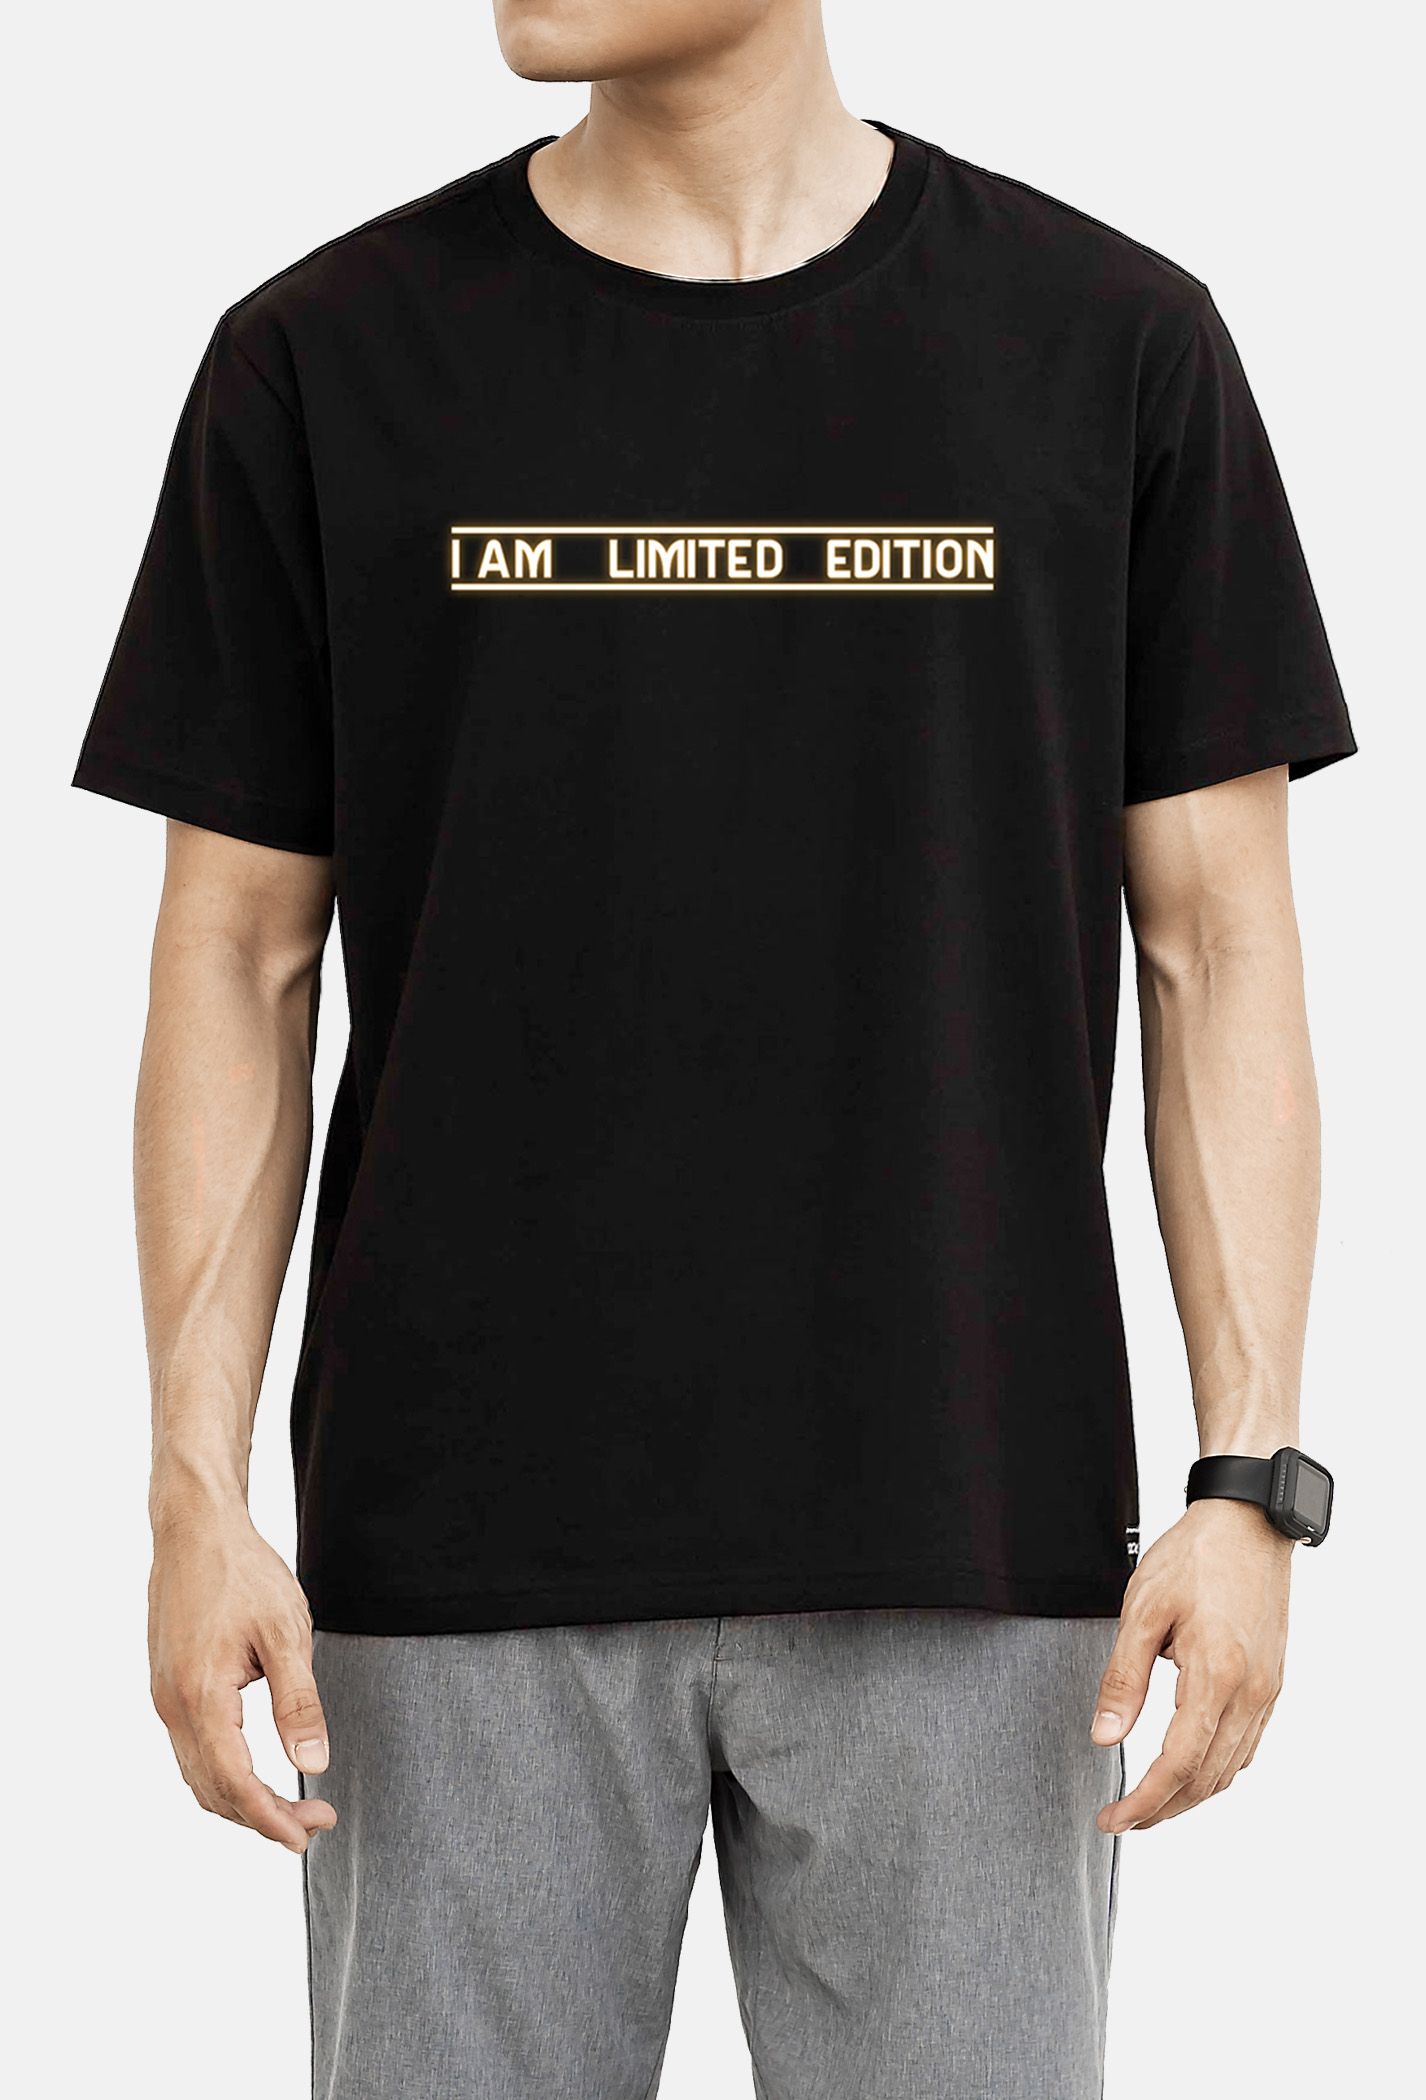 Áo thun Cotton Compact in "I AM LIMITED" in phản quang - Màu đen  3